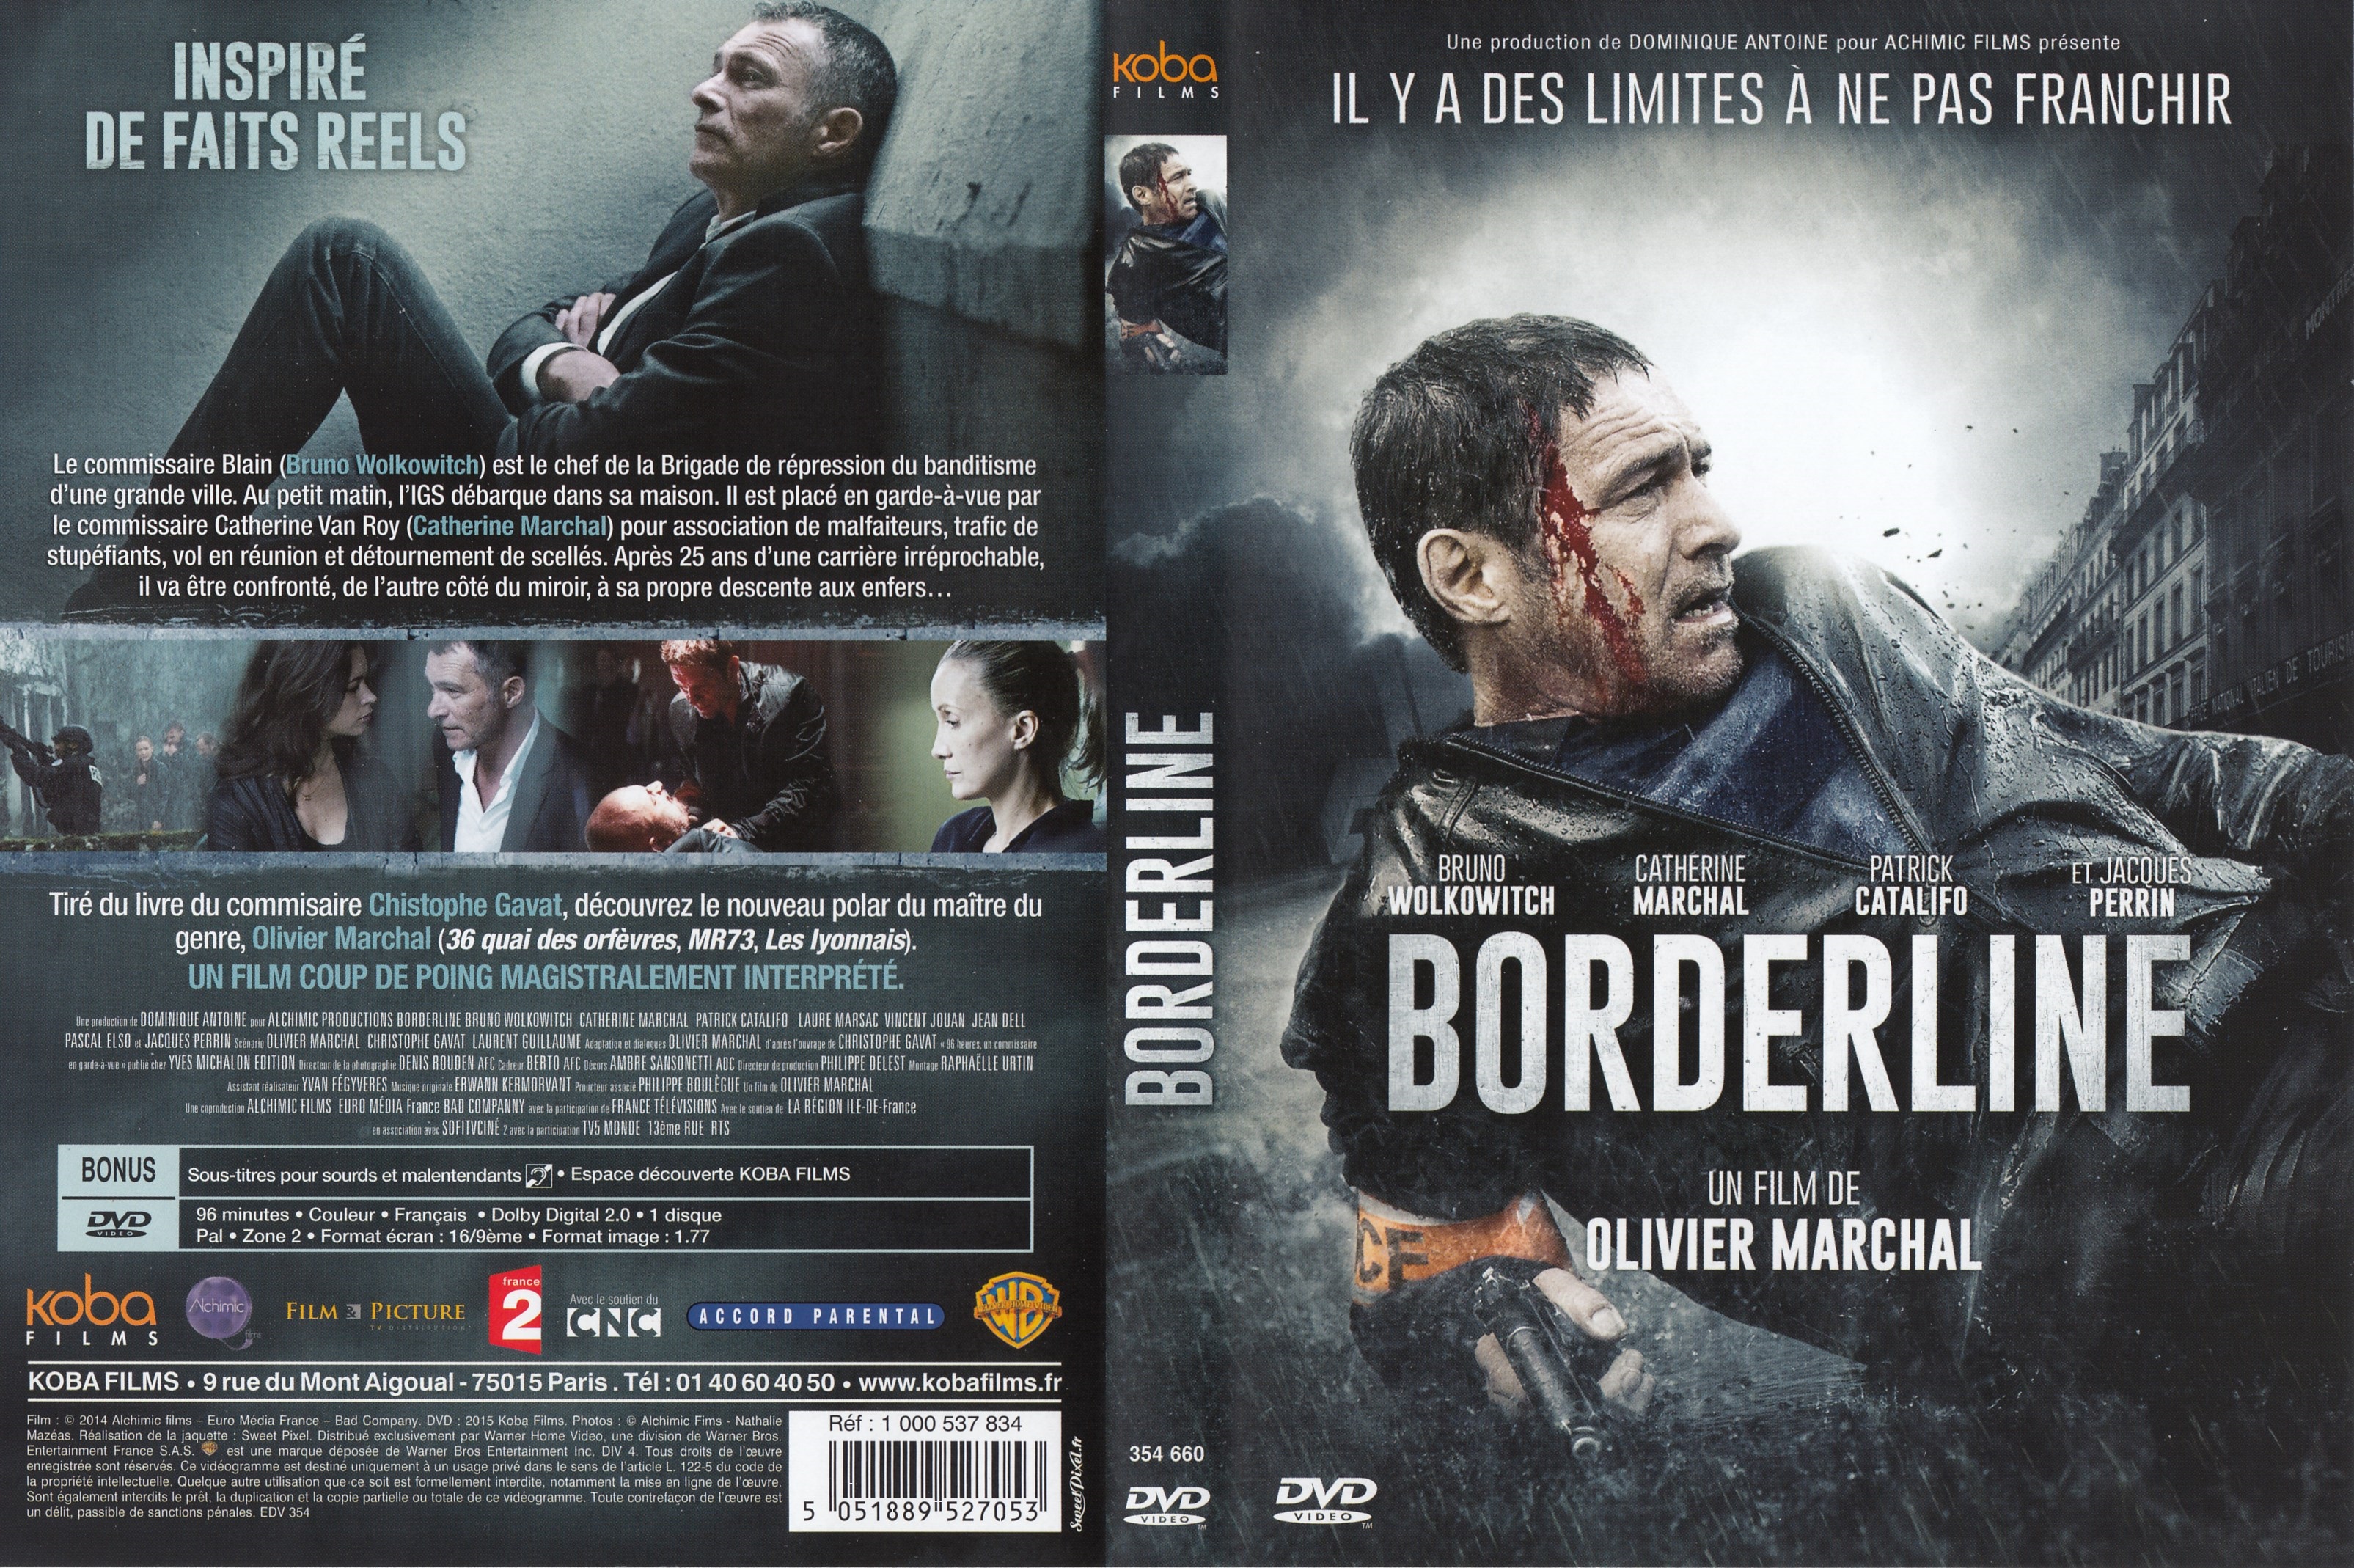 Jaquette DVD Borderline (2014)